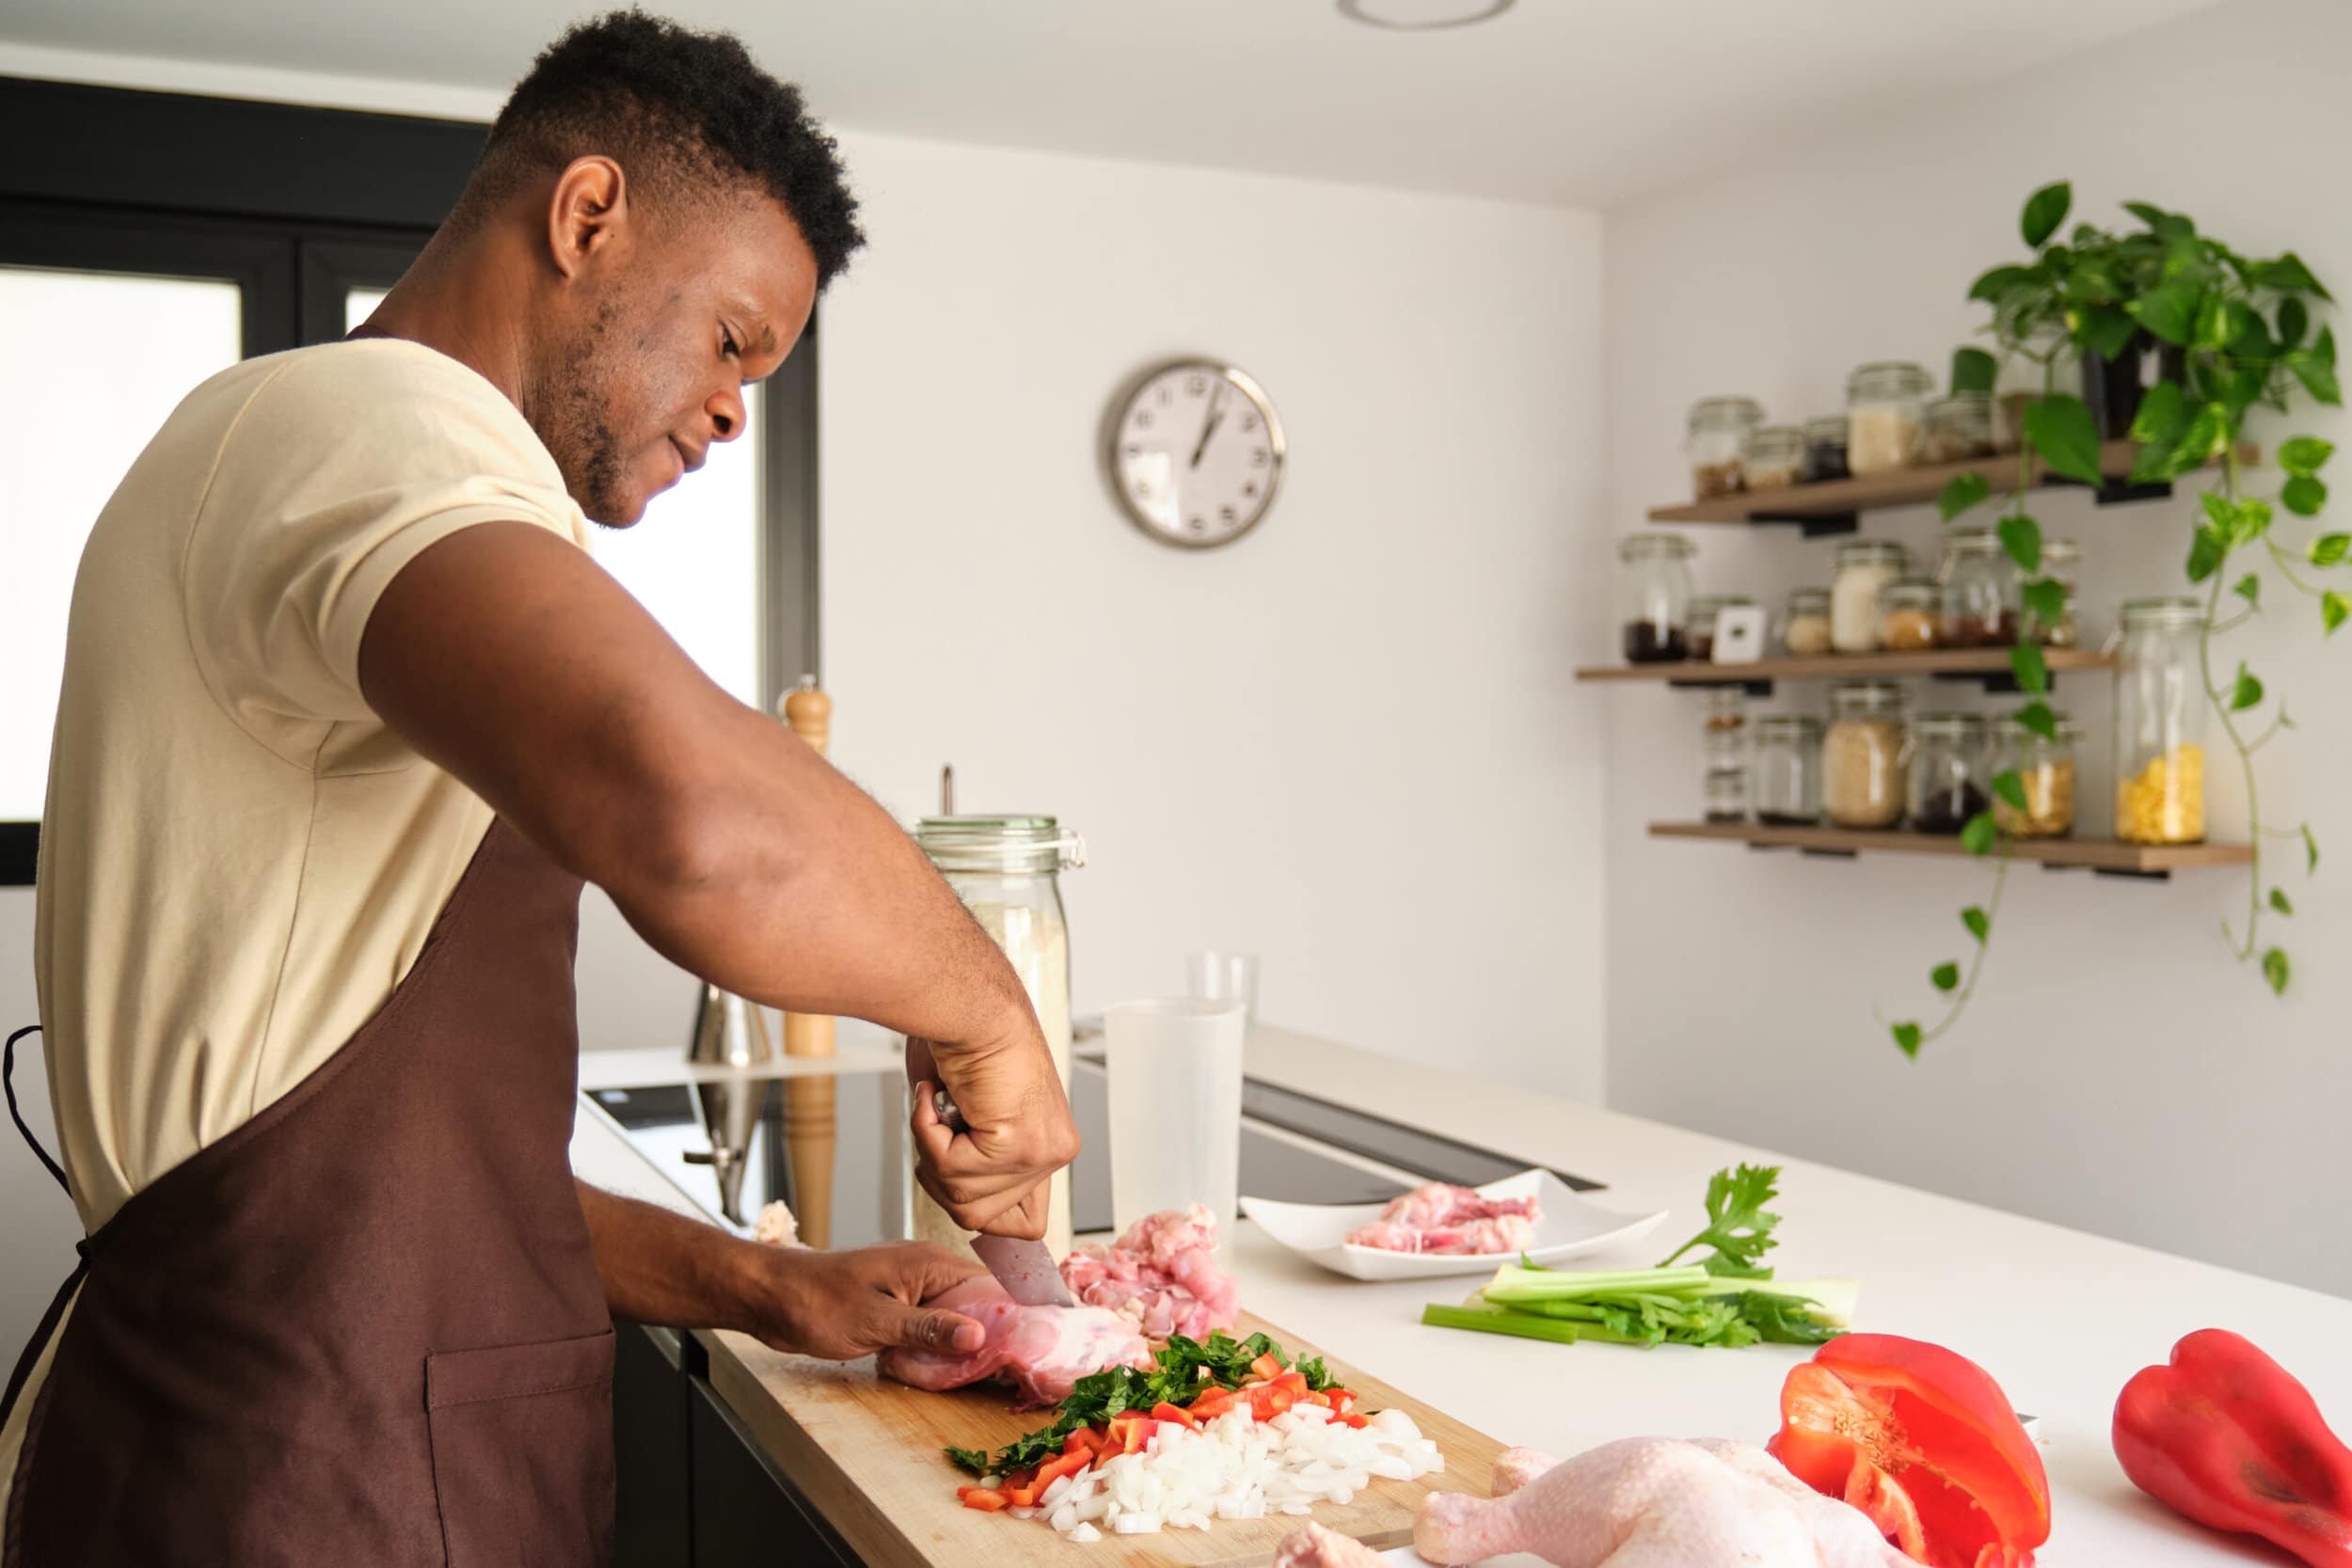 Young black man de-boning chicken to prepare a recipe in a kitchen.